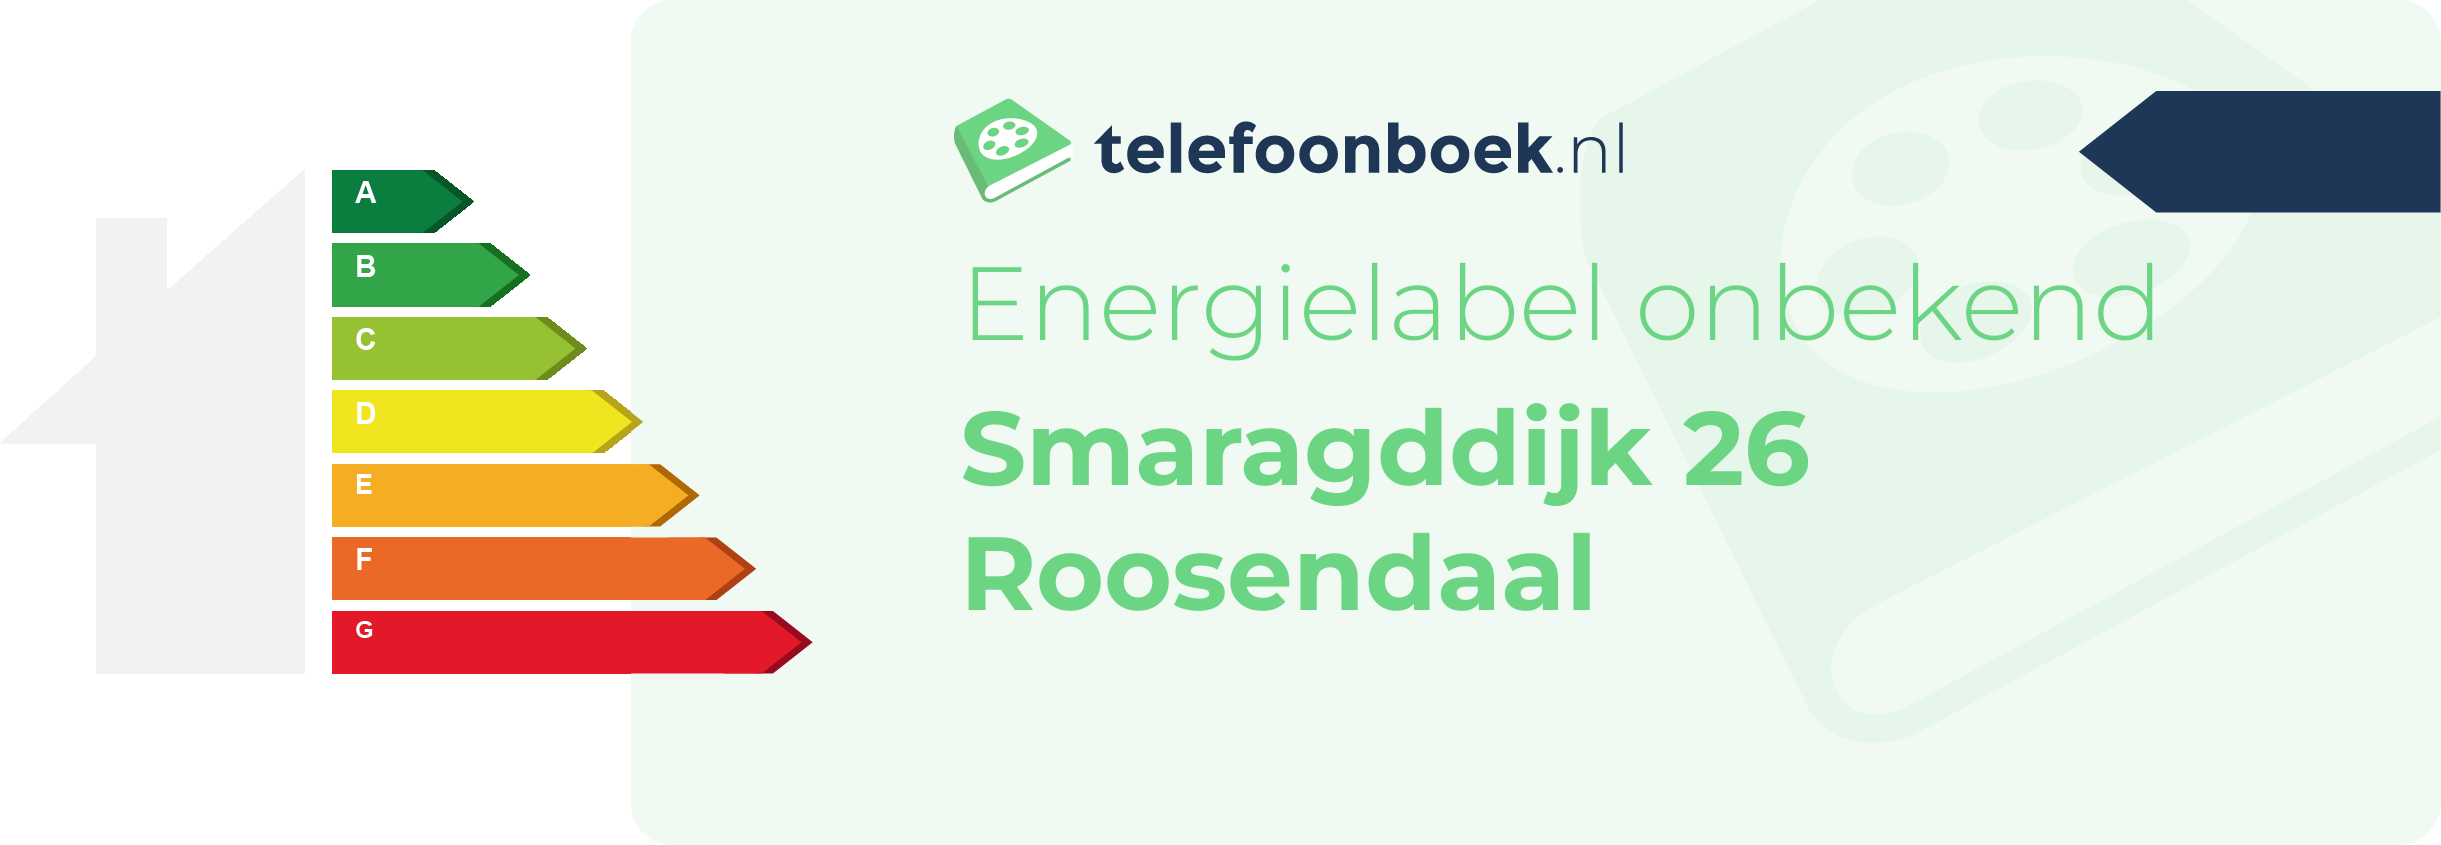 Energielabel Smaragddijk 26 Roosendaal